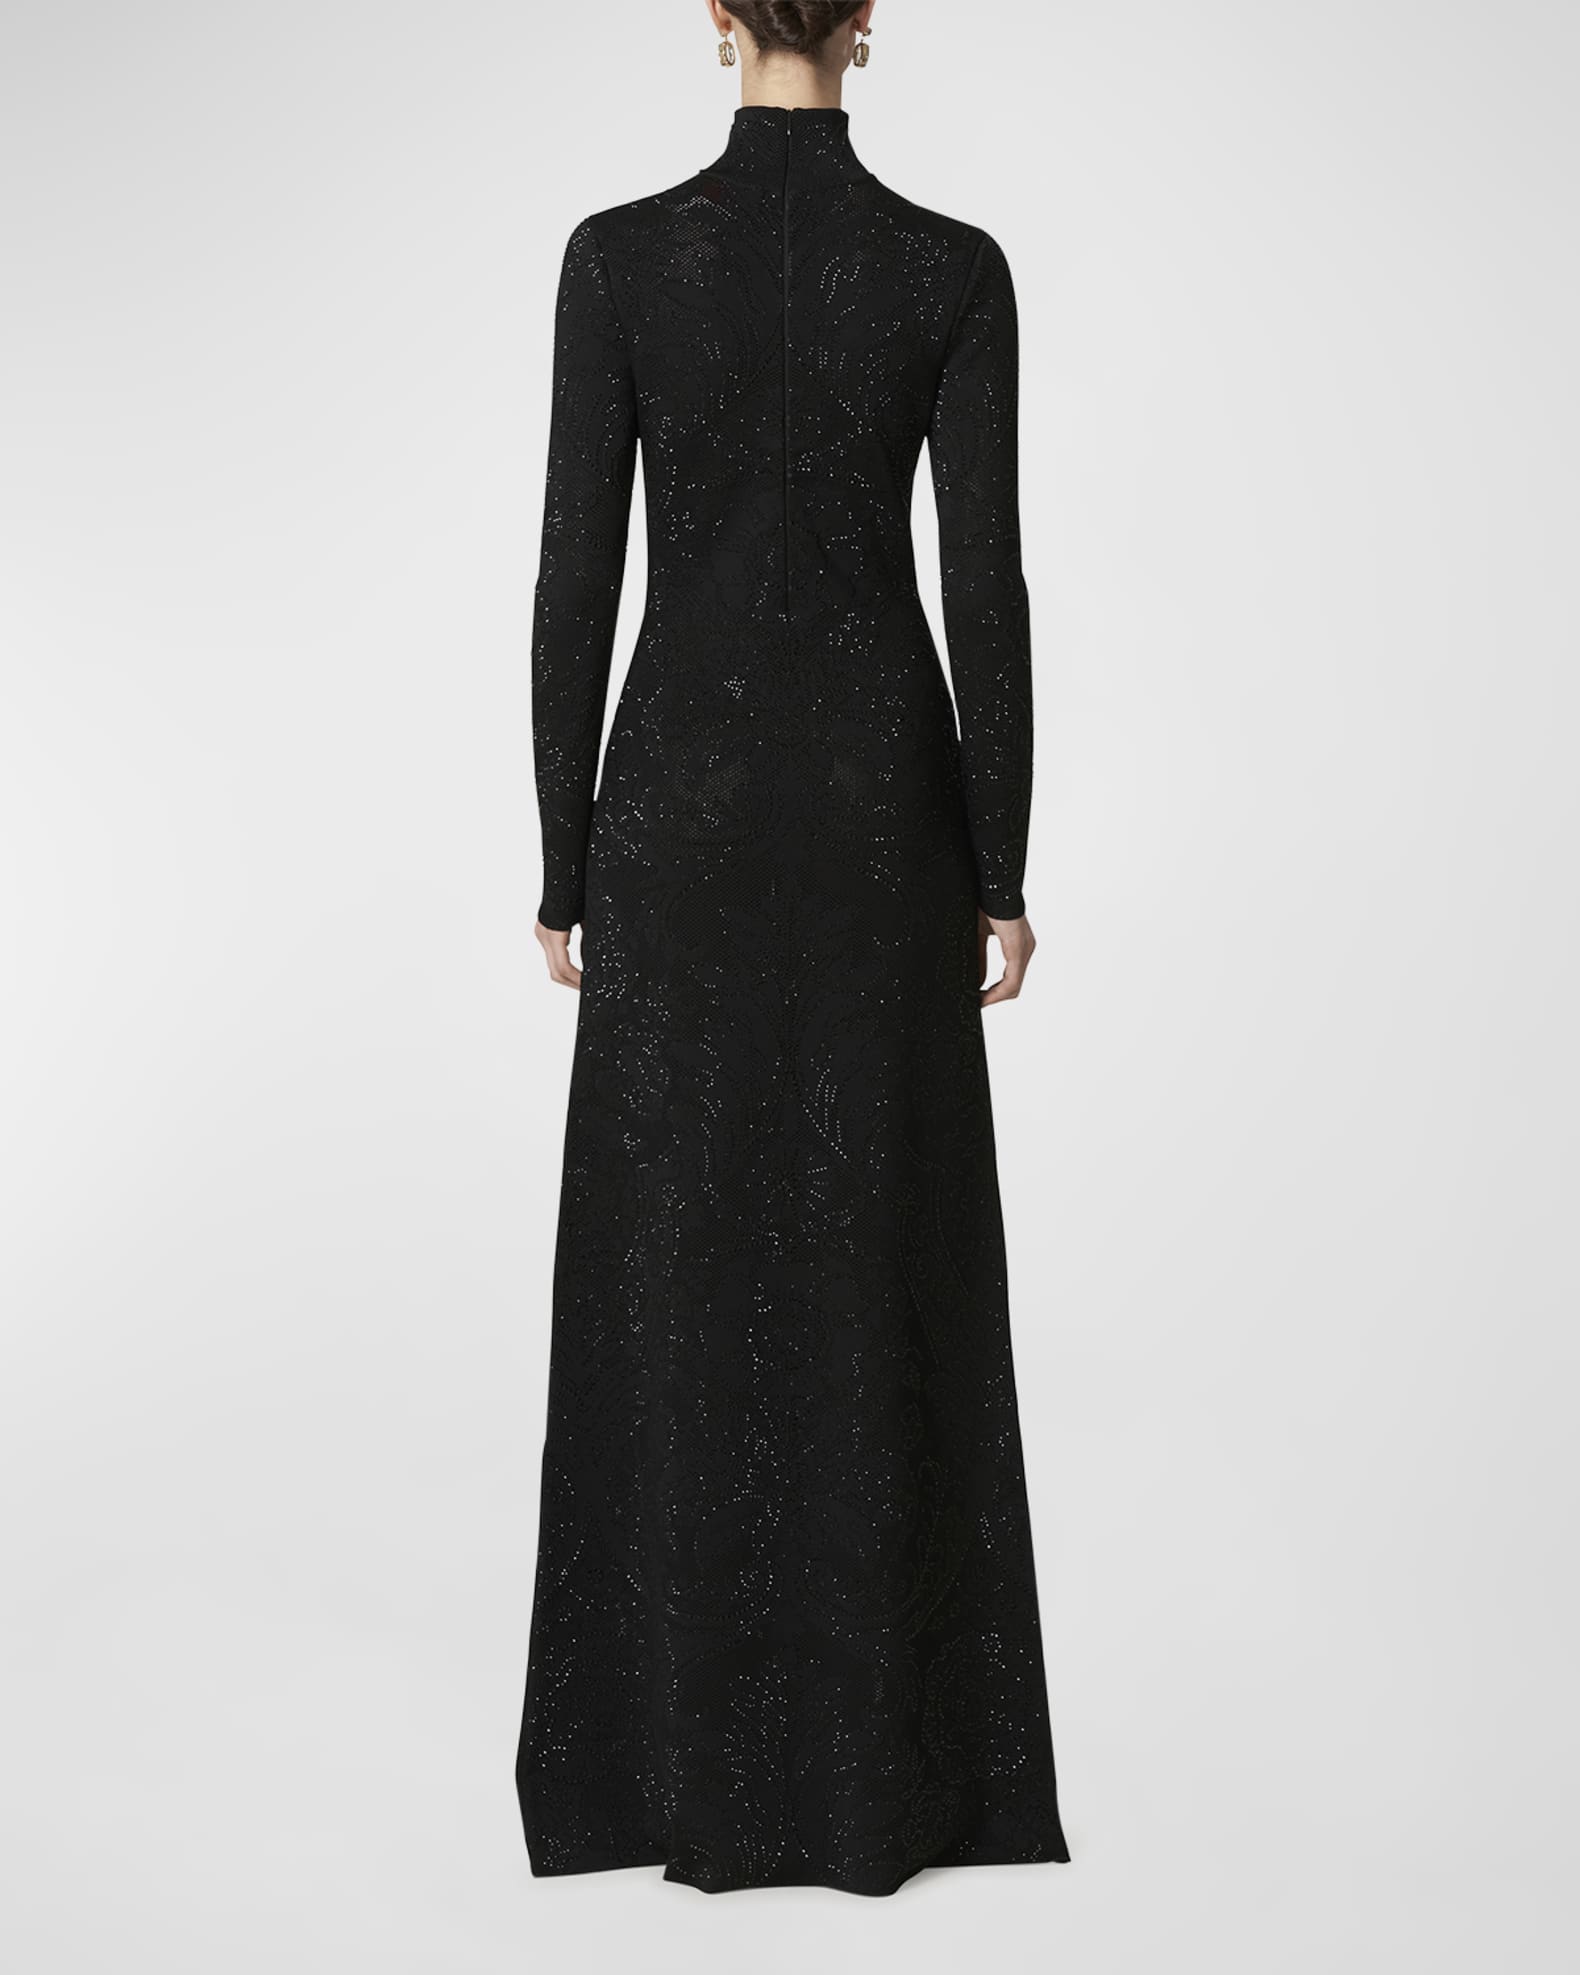 Louis Vuitton Crystal Lapel Robe Jacket BLACK. Size 40